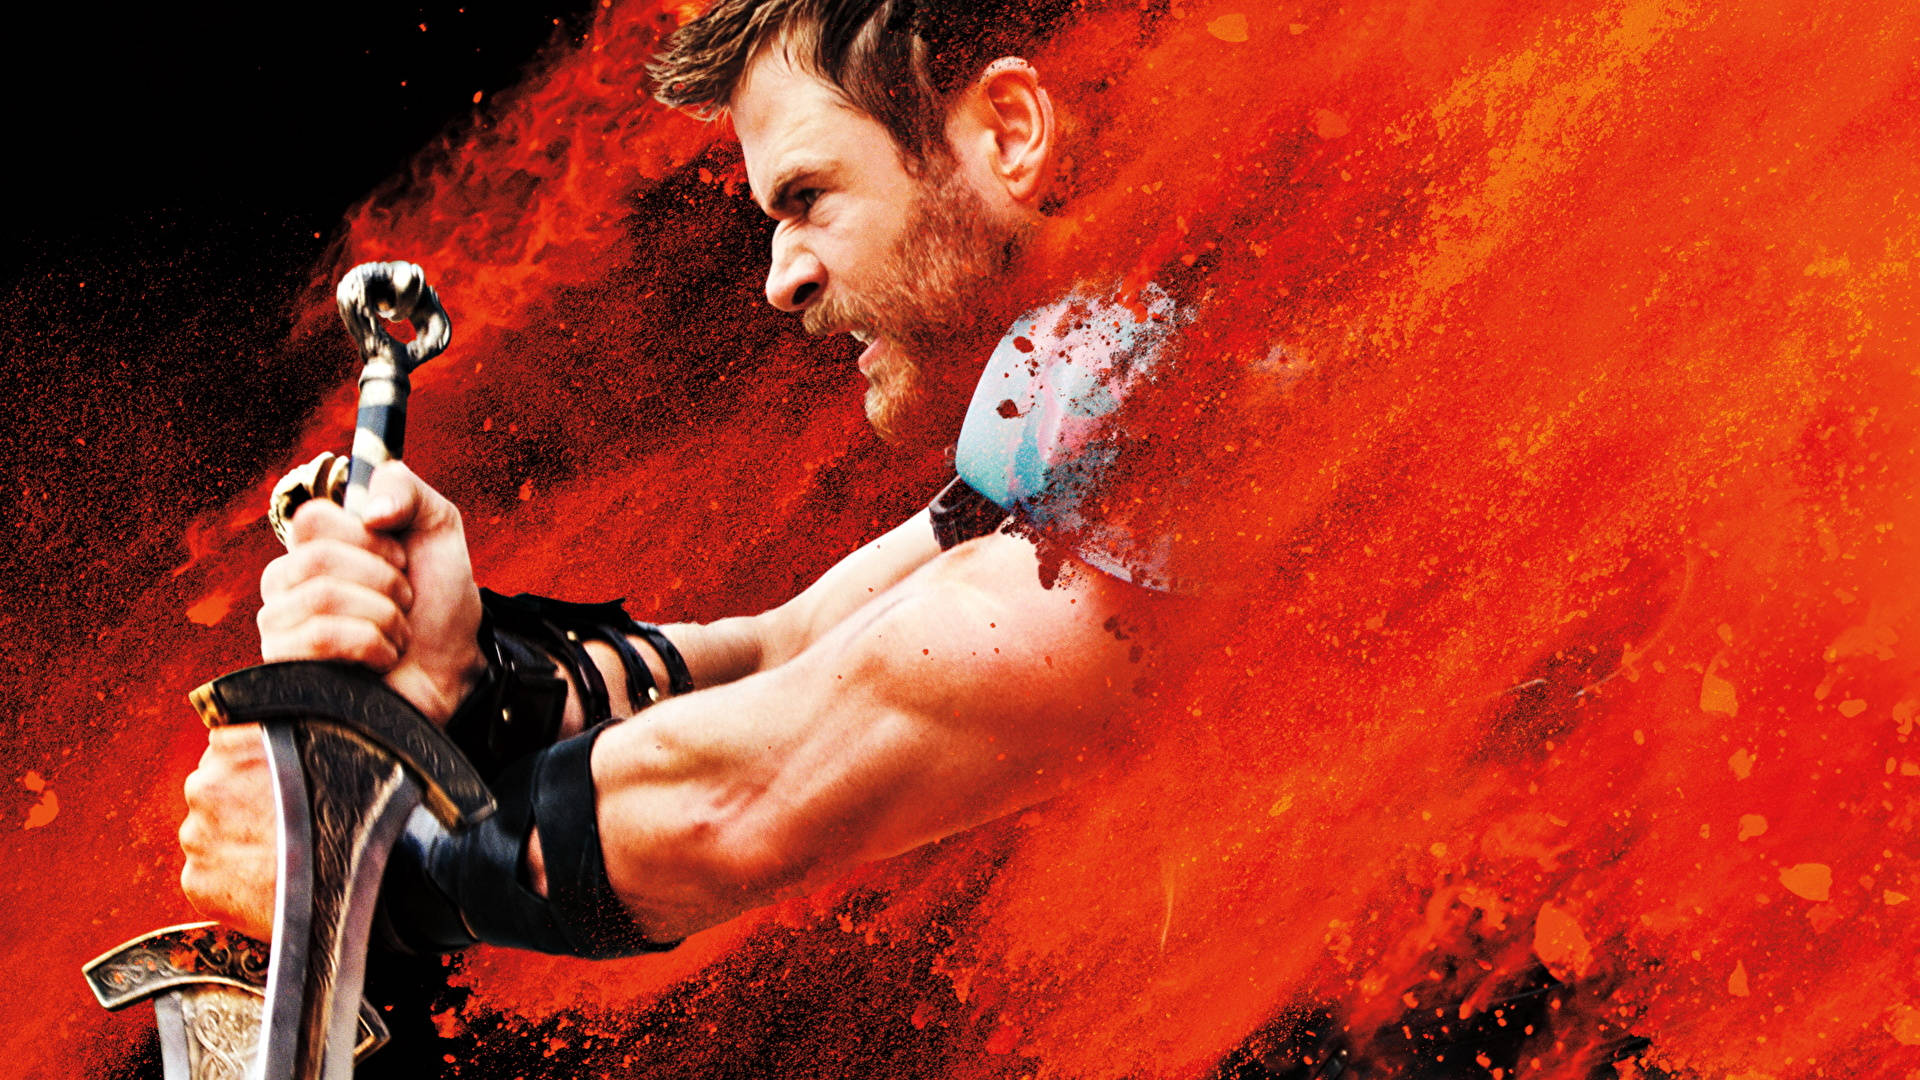 Chris Hemsworth Portrayed As Marvel's Legendary Superhero, Thor Background